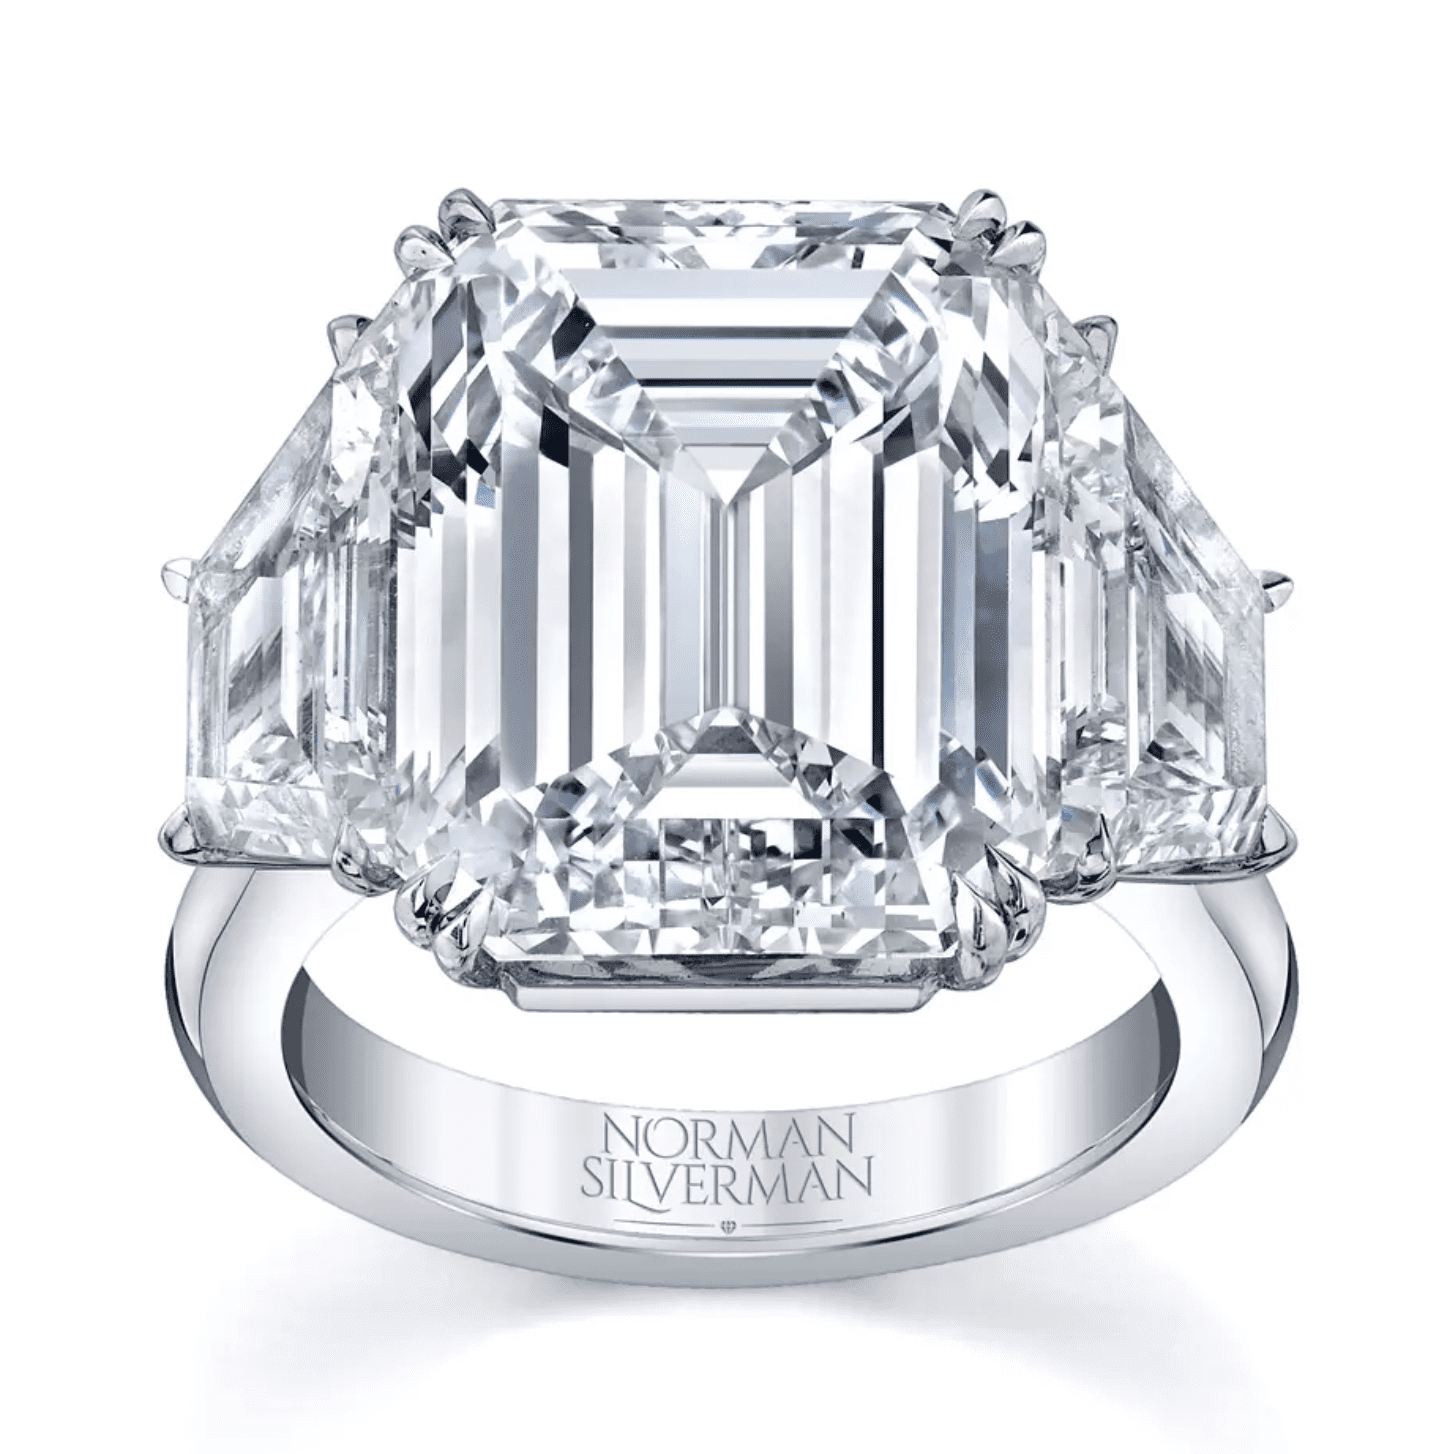 Norman Silverman Emerald Cut Engagement Ring